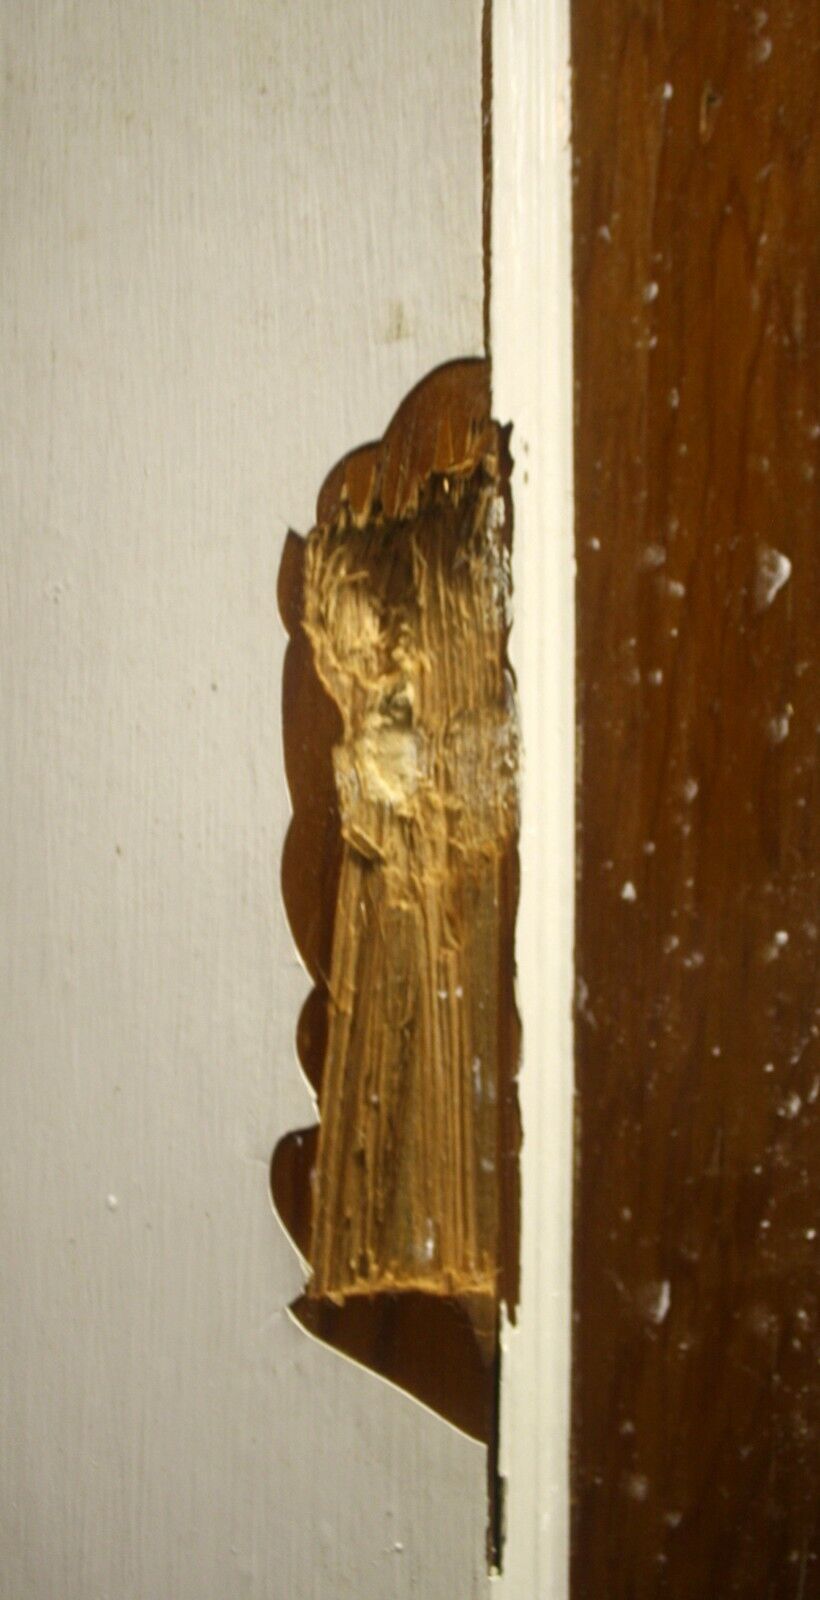 30"x79" Antique Vintage Old Reclaimed Salvaged Interior SOLID Wood Wooden Swinging Door Single Panel